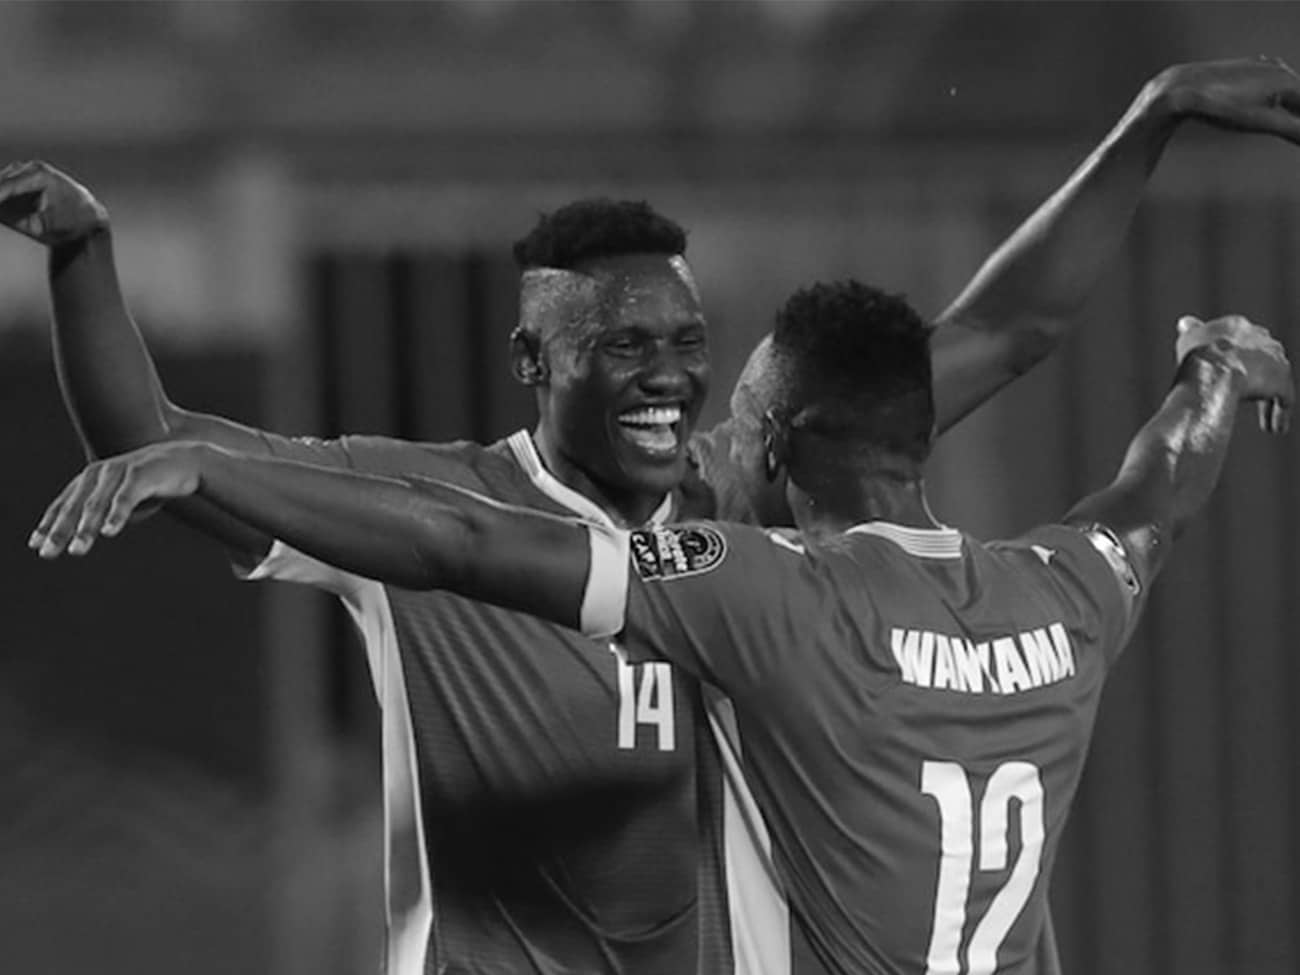 Kenyan Players Celebrating at a Match